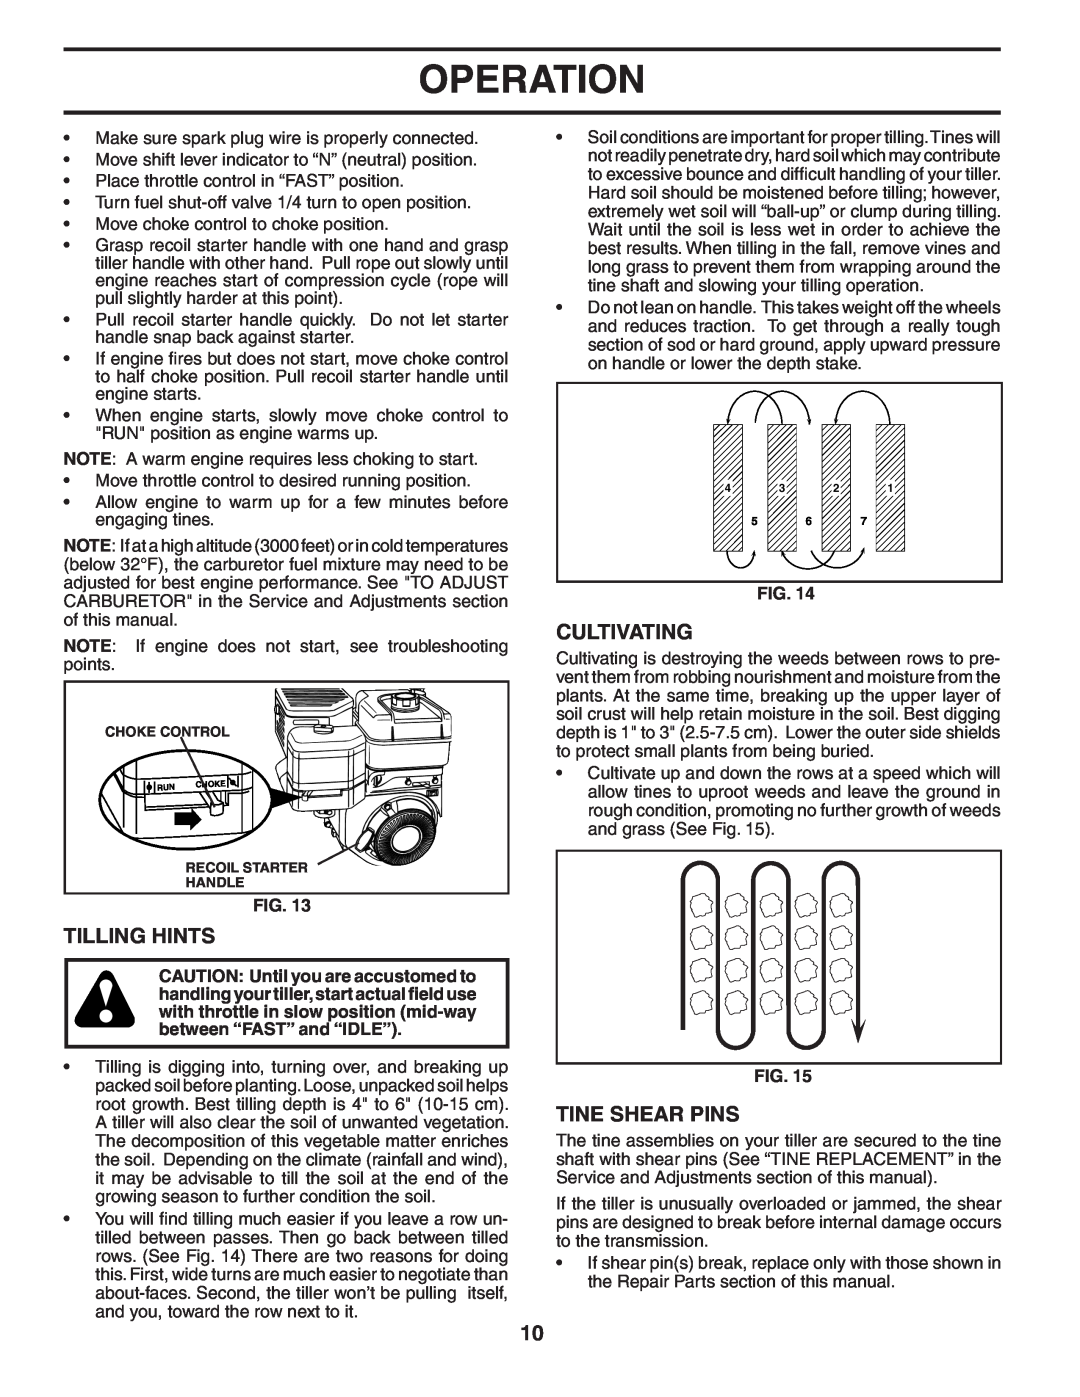 Poulan 401434 manual Tilling Hints, Cultivating, Tine Shear Pins, Operation 